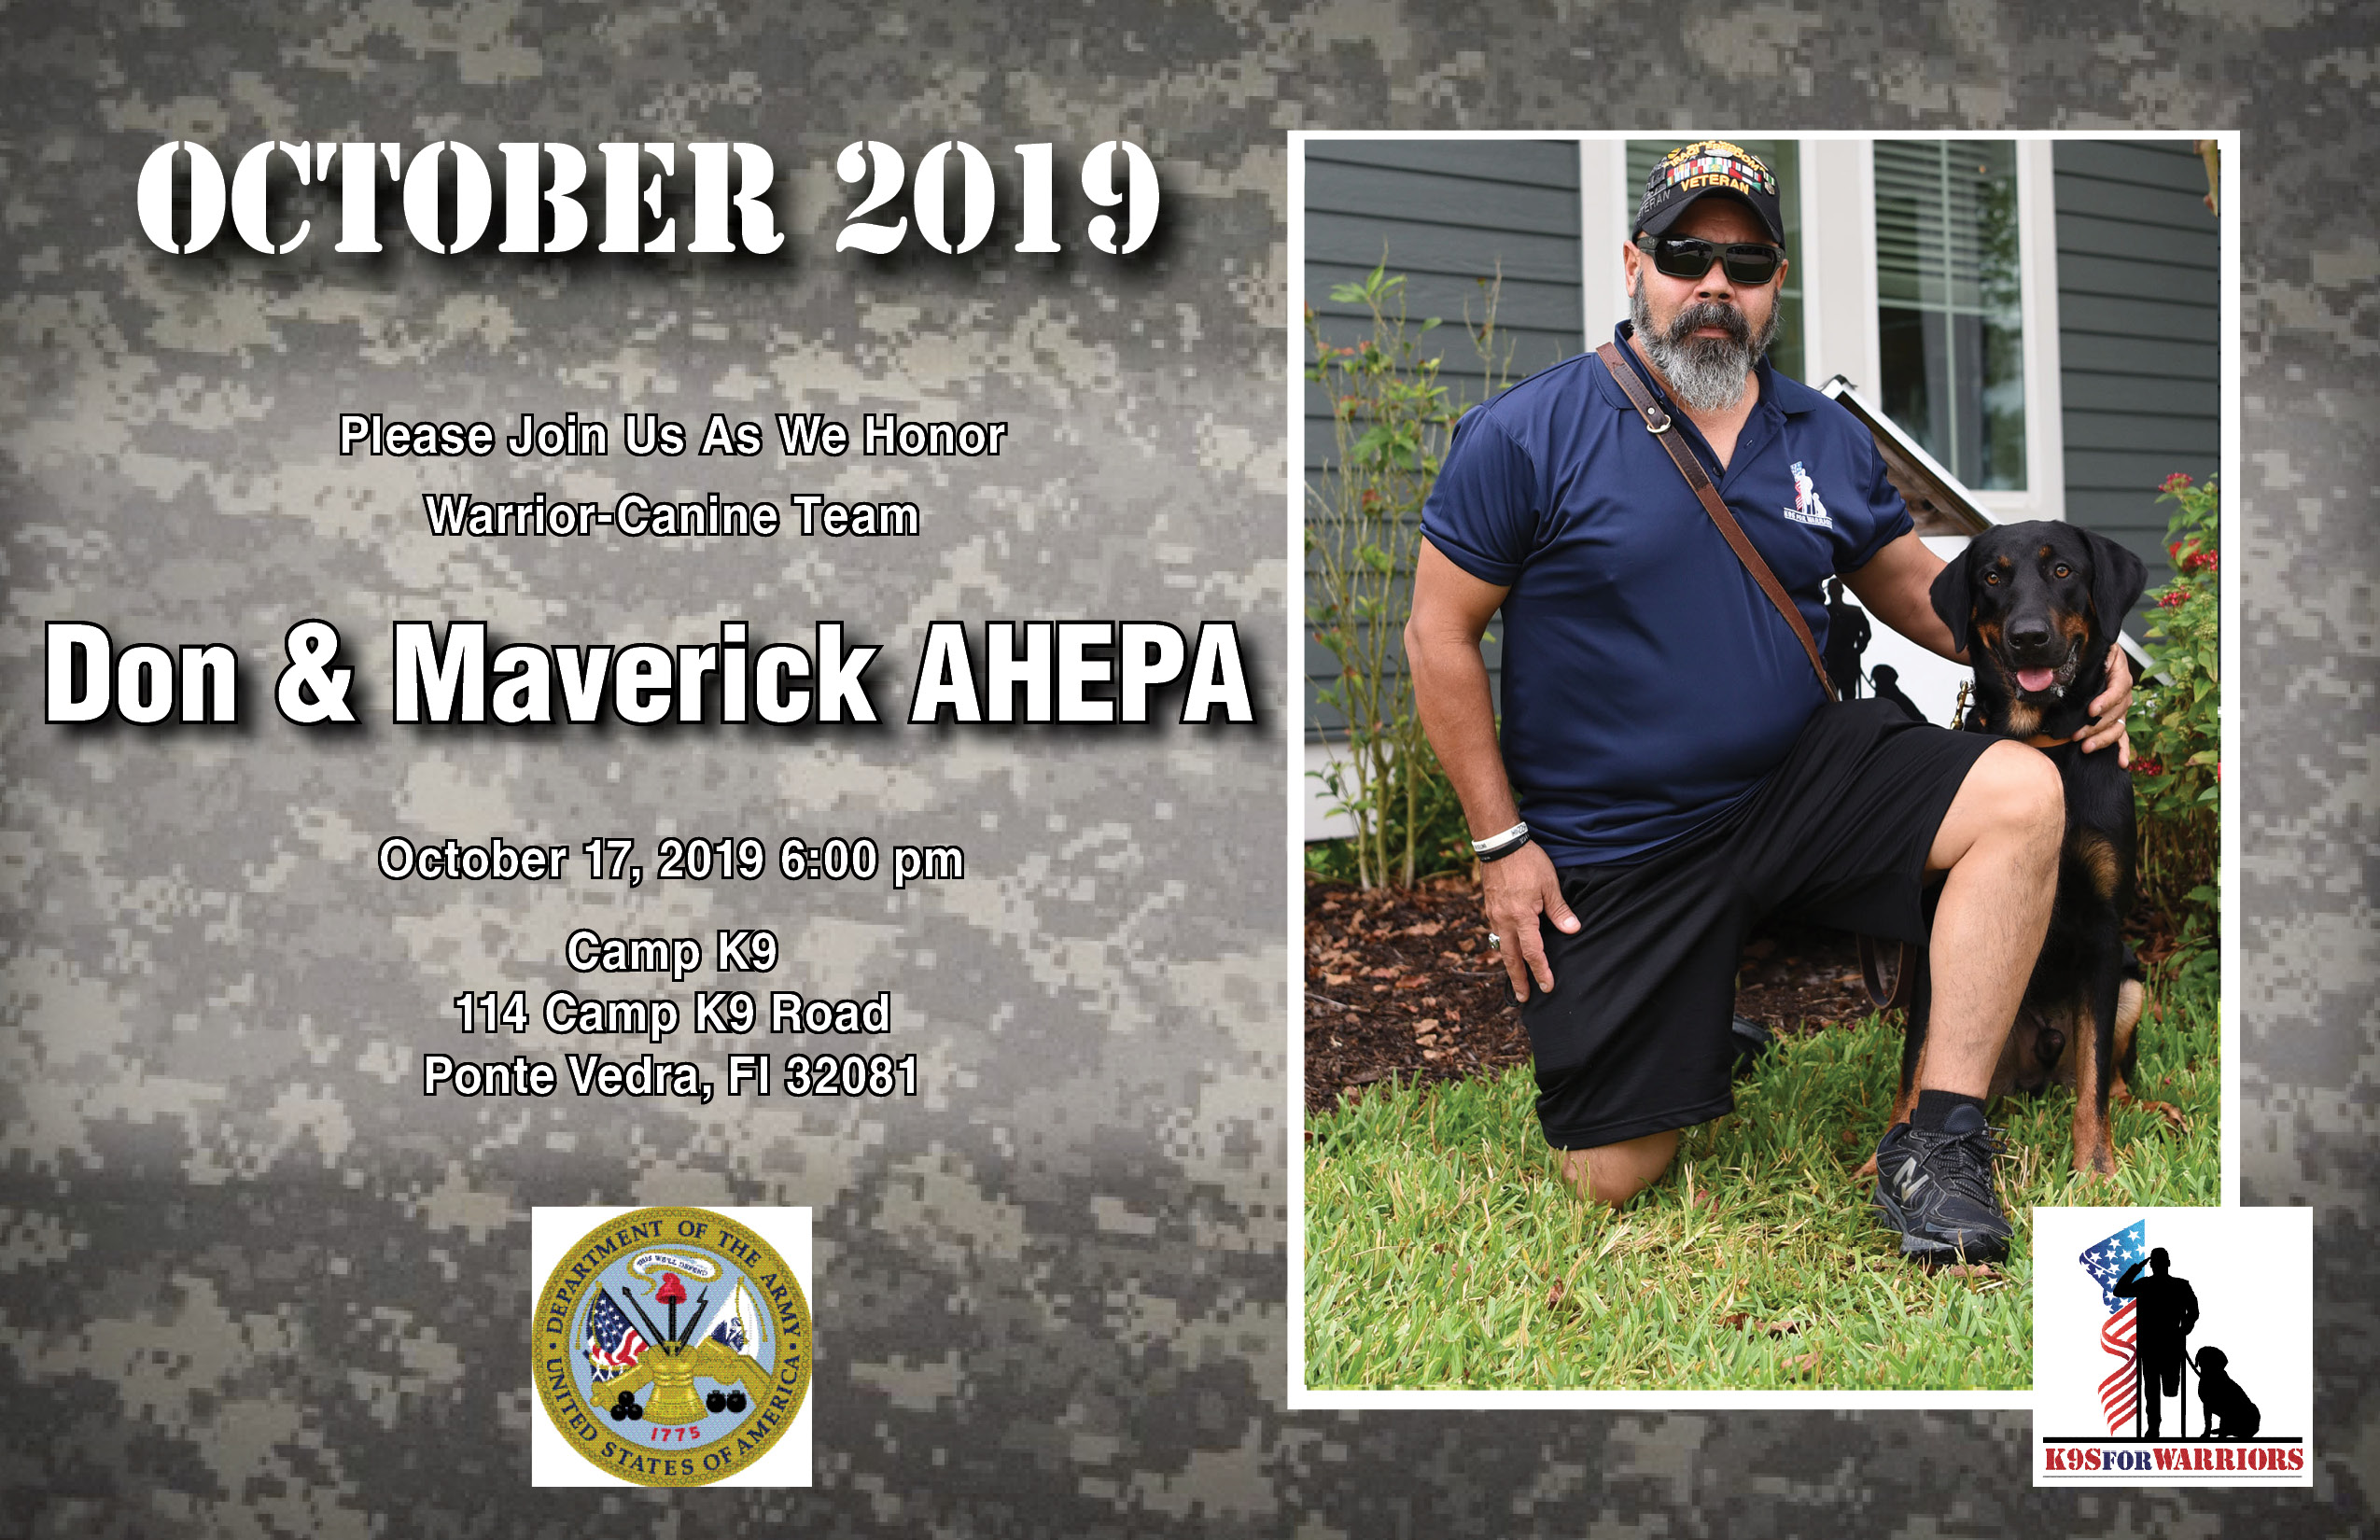 MAVERICK AHEPA ~ AHEPA Service Dogs for Warriors